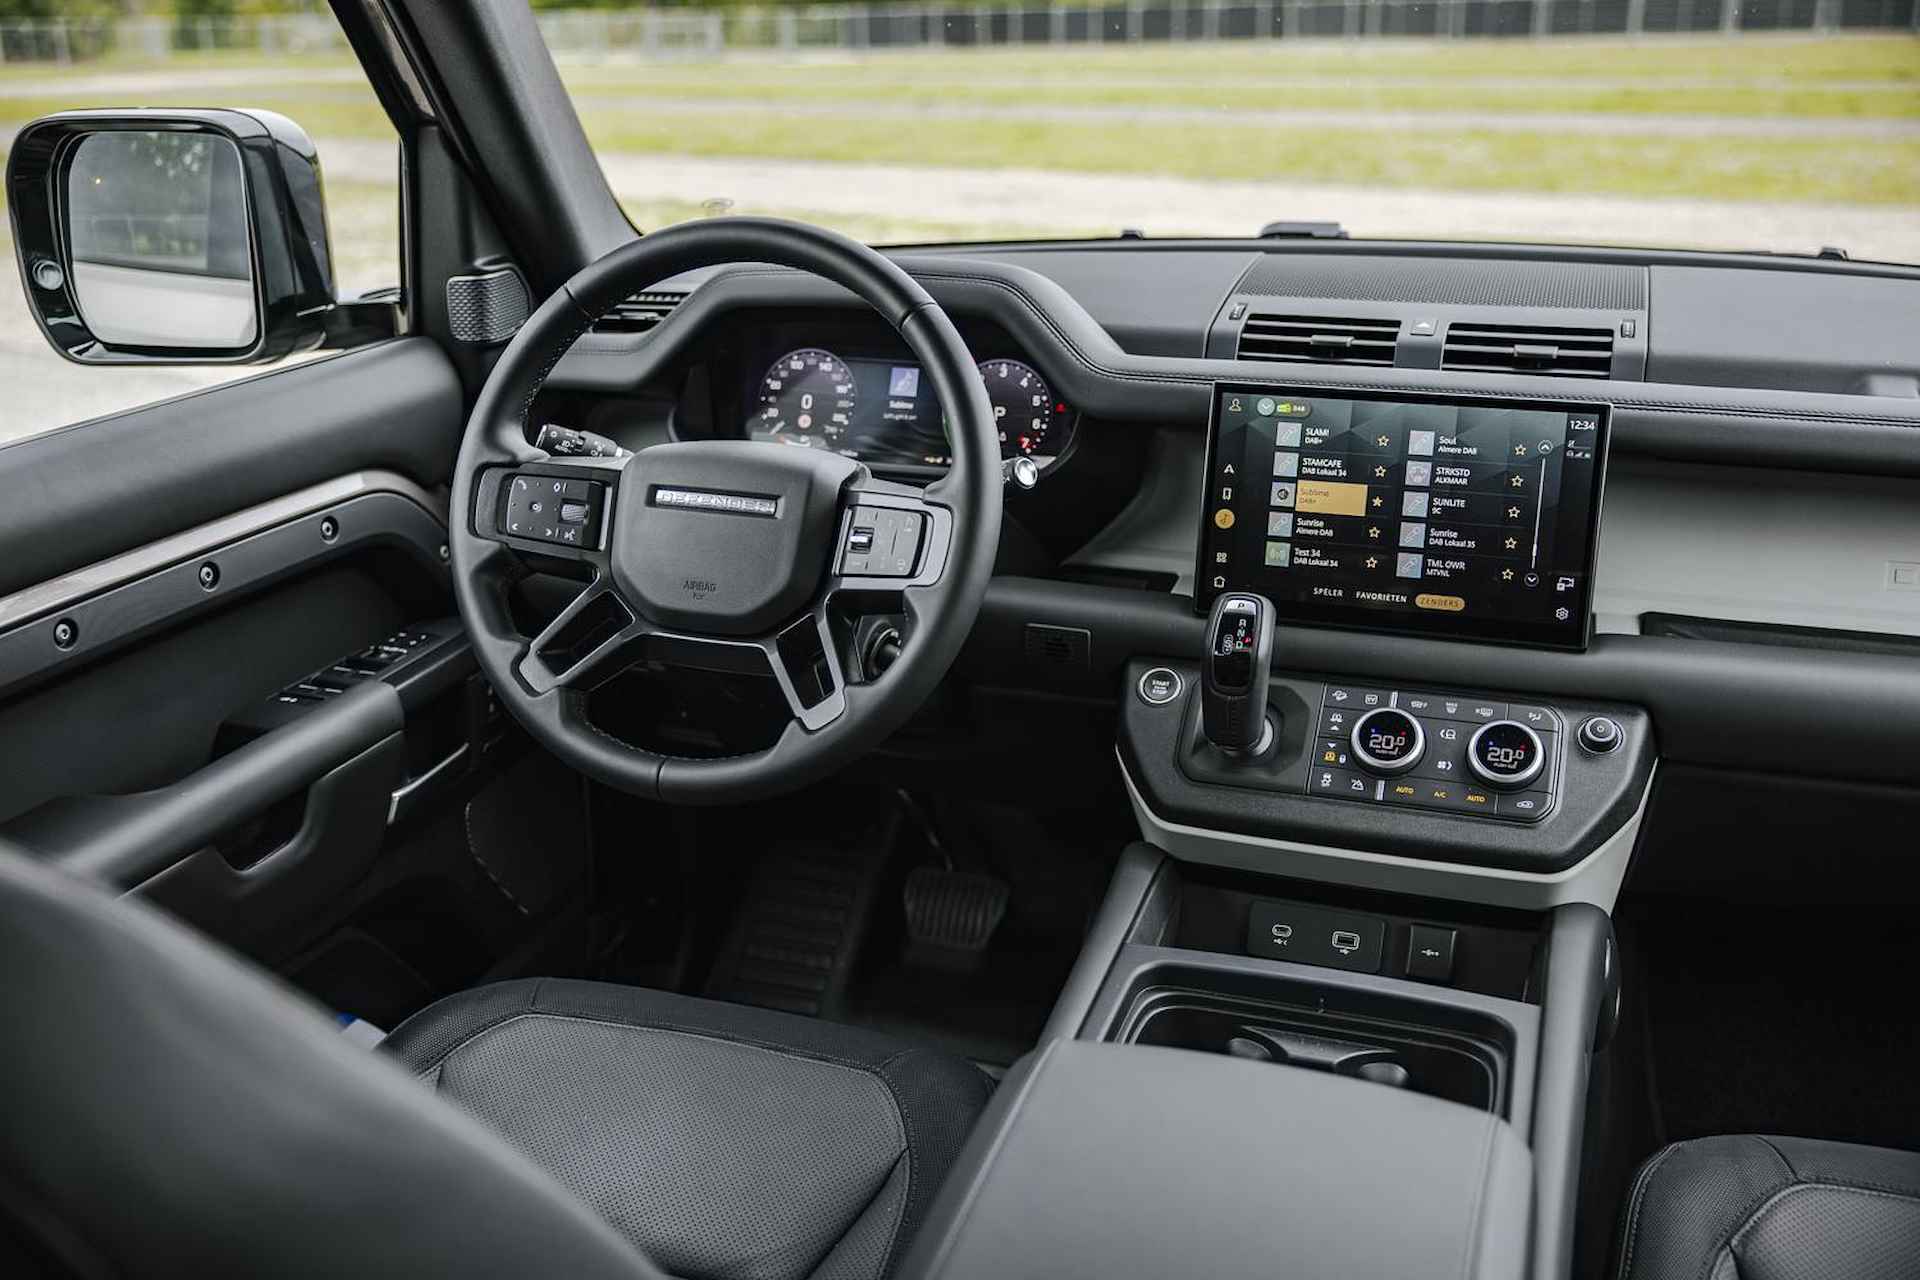 Land Rover Defender 2.0 P400e 110 X-Dynamic HSE | Panoramadak | 22" Velgen in Gloss Black | 11,4" Touch Screen | Cold Climate Pack | Elektrische Trekhaak | Expedition imperiaal | Uitklapbare Dakladder| All Season Banden - 18/43